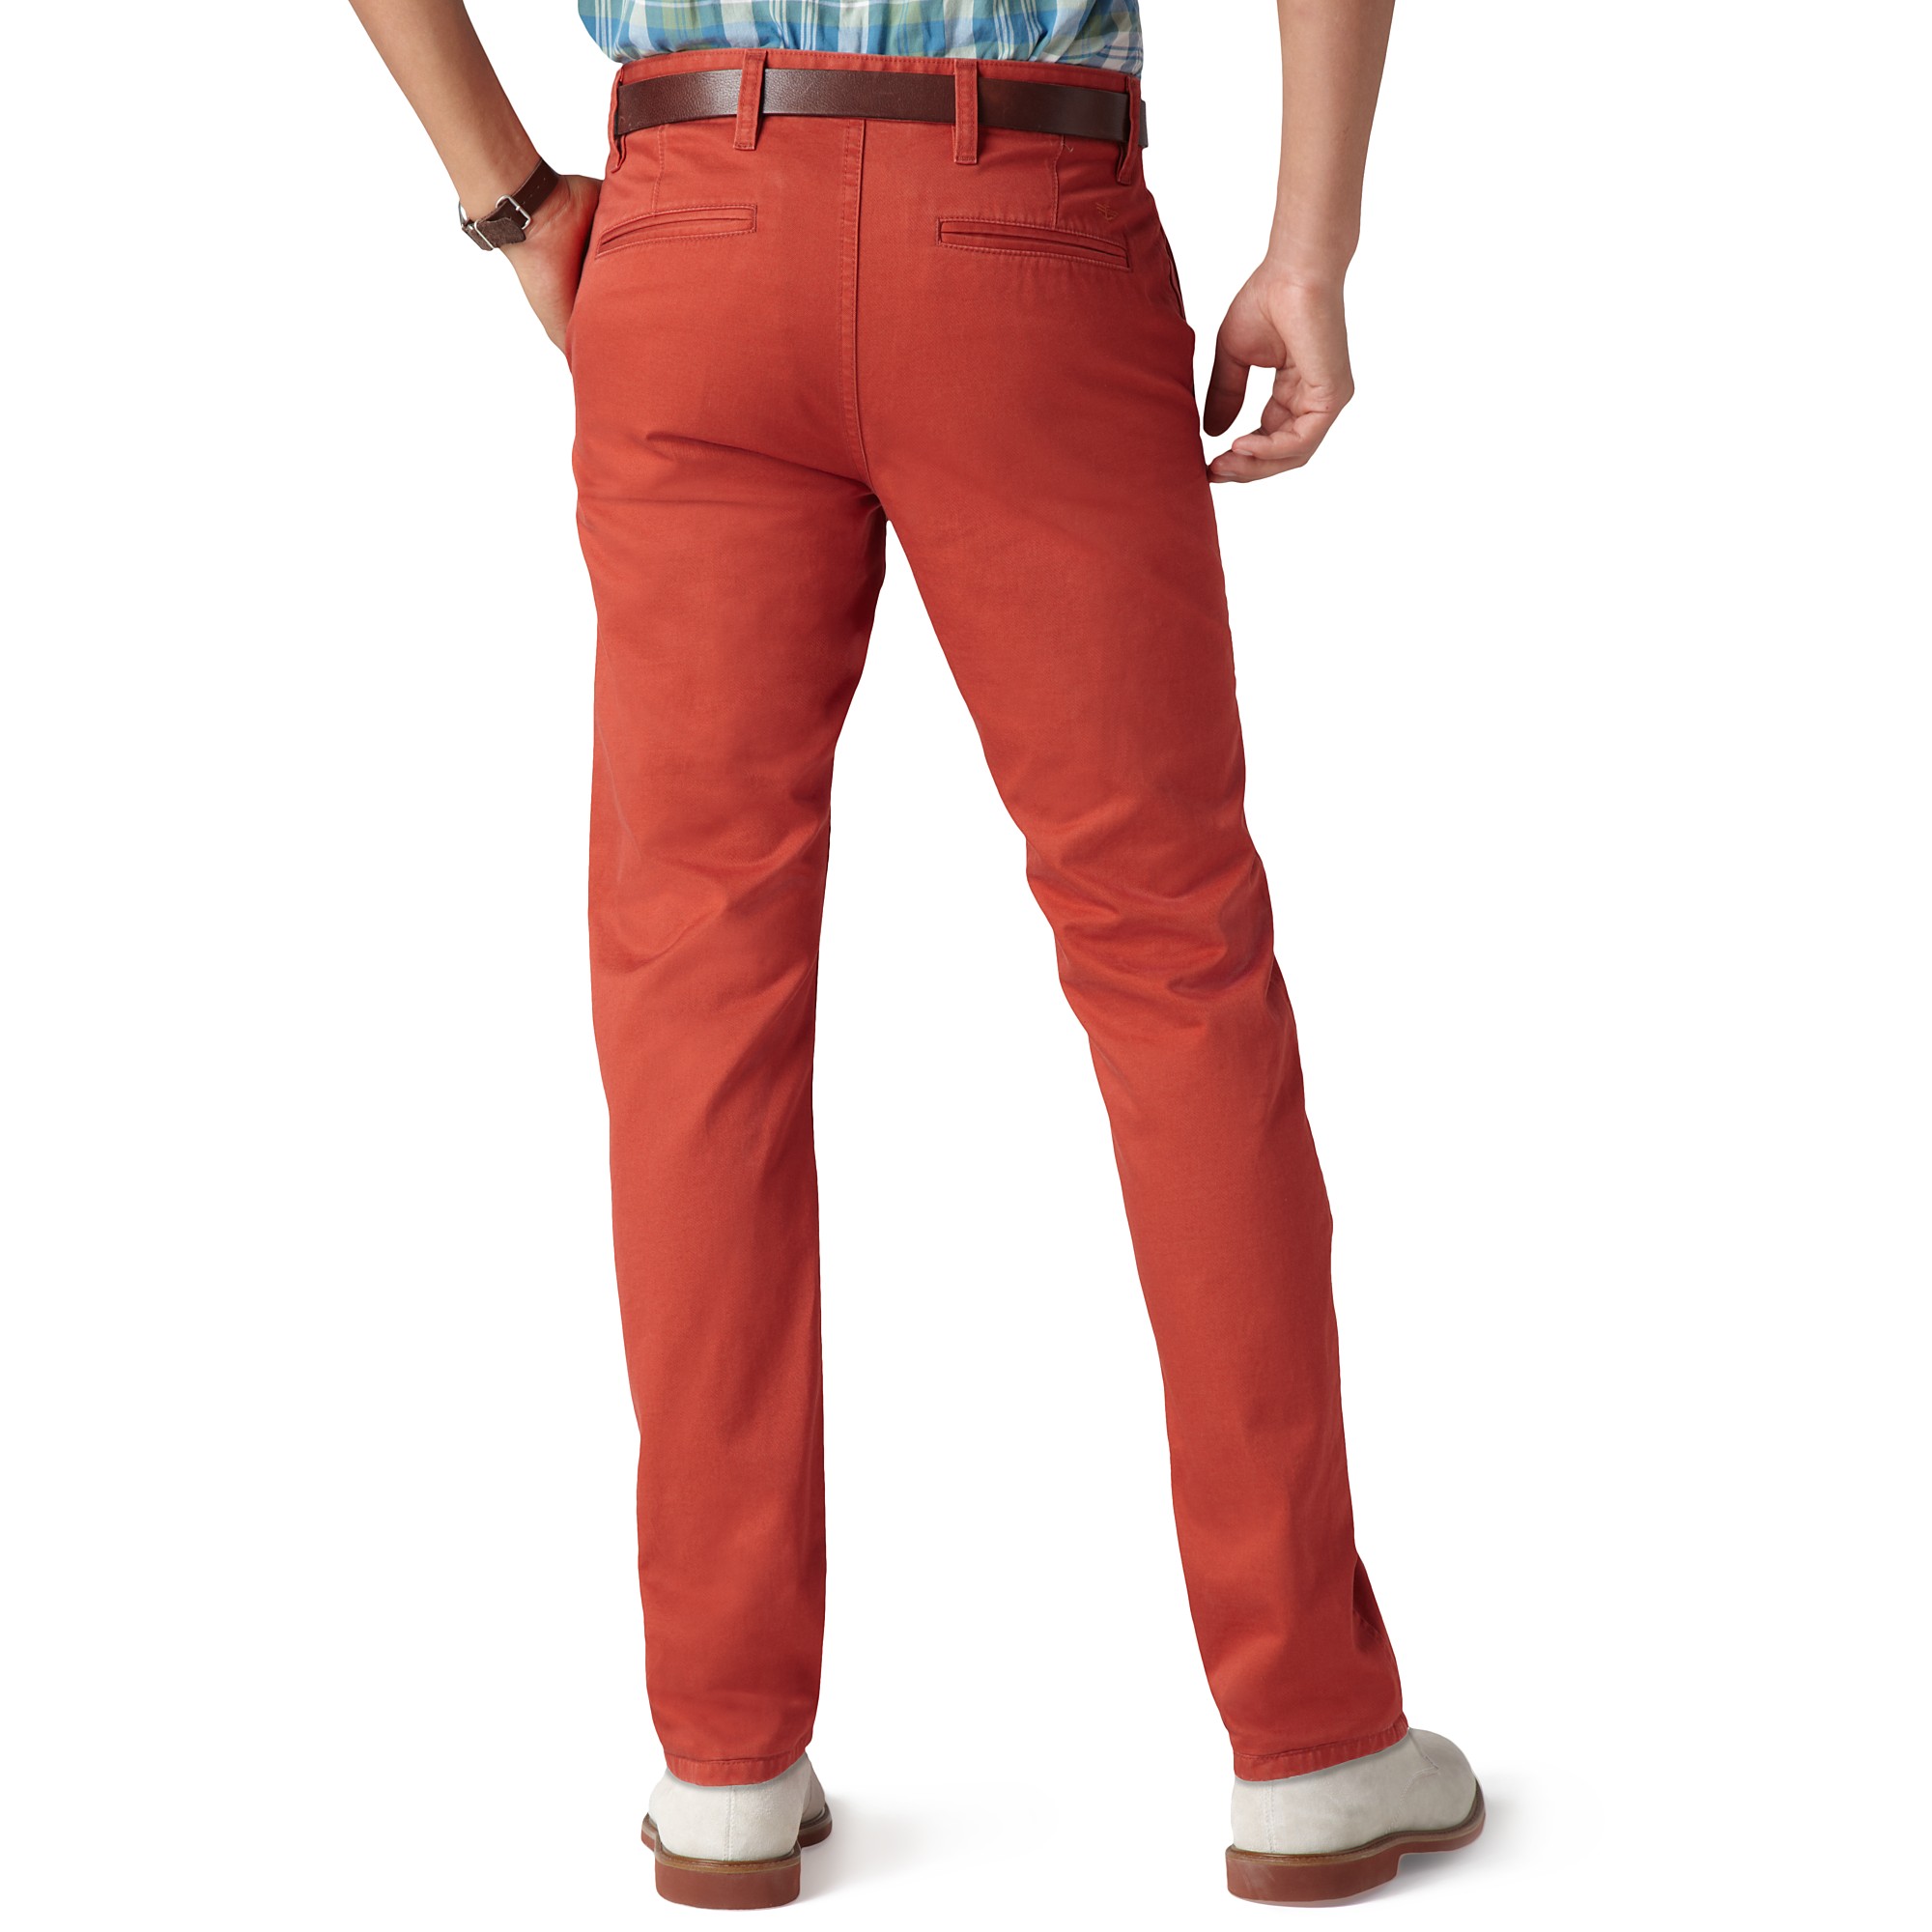 Lyst - Dockers Slim Fit Alpha Khaki Color in Red for Men